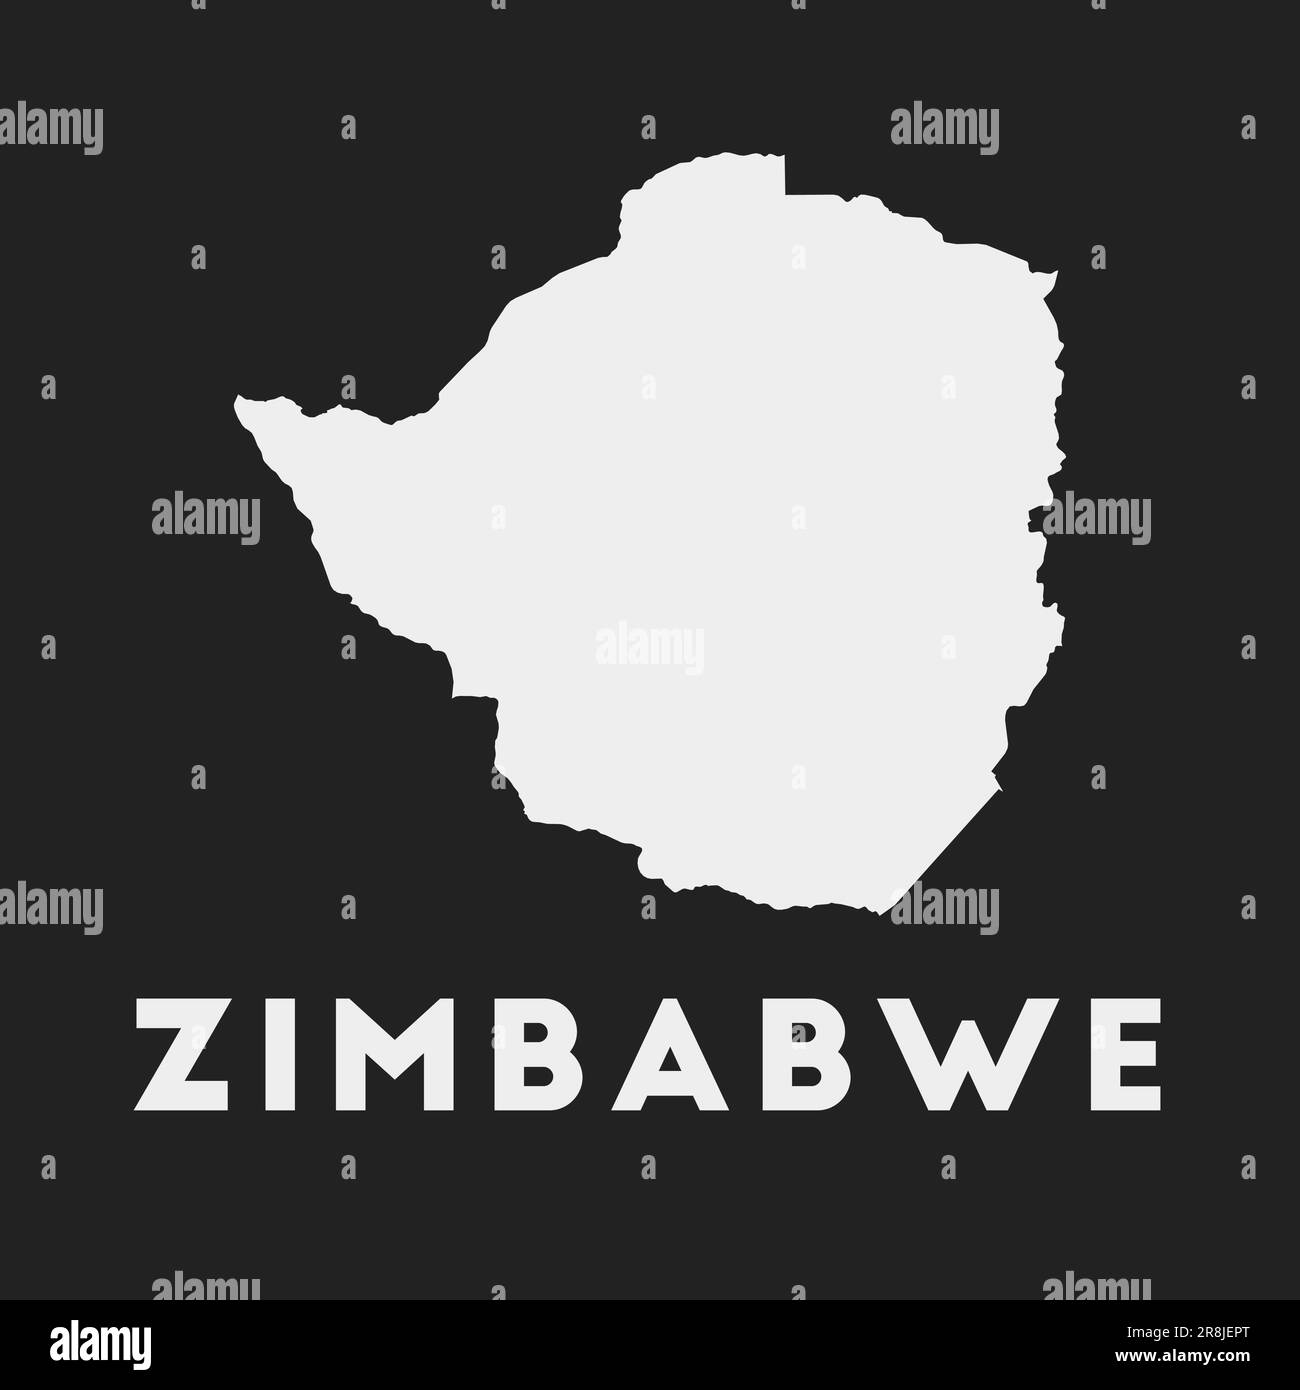 Zimbabwe icon. Country map on dark background. Stylish Zimbabwe map with country name. Vector illustration. Stock Vector